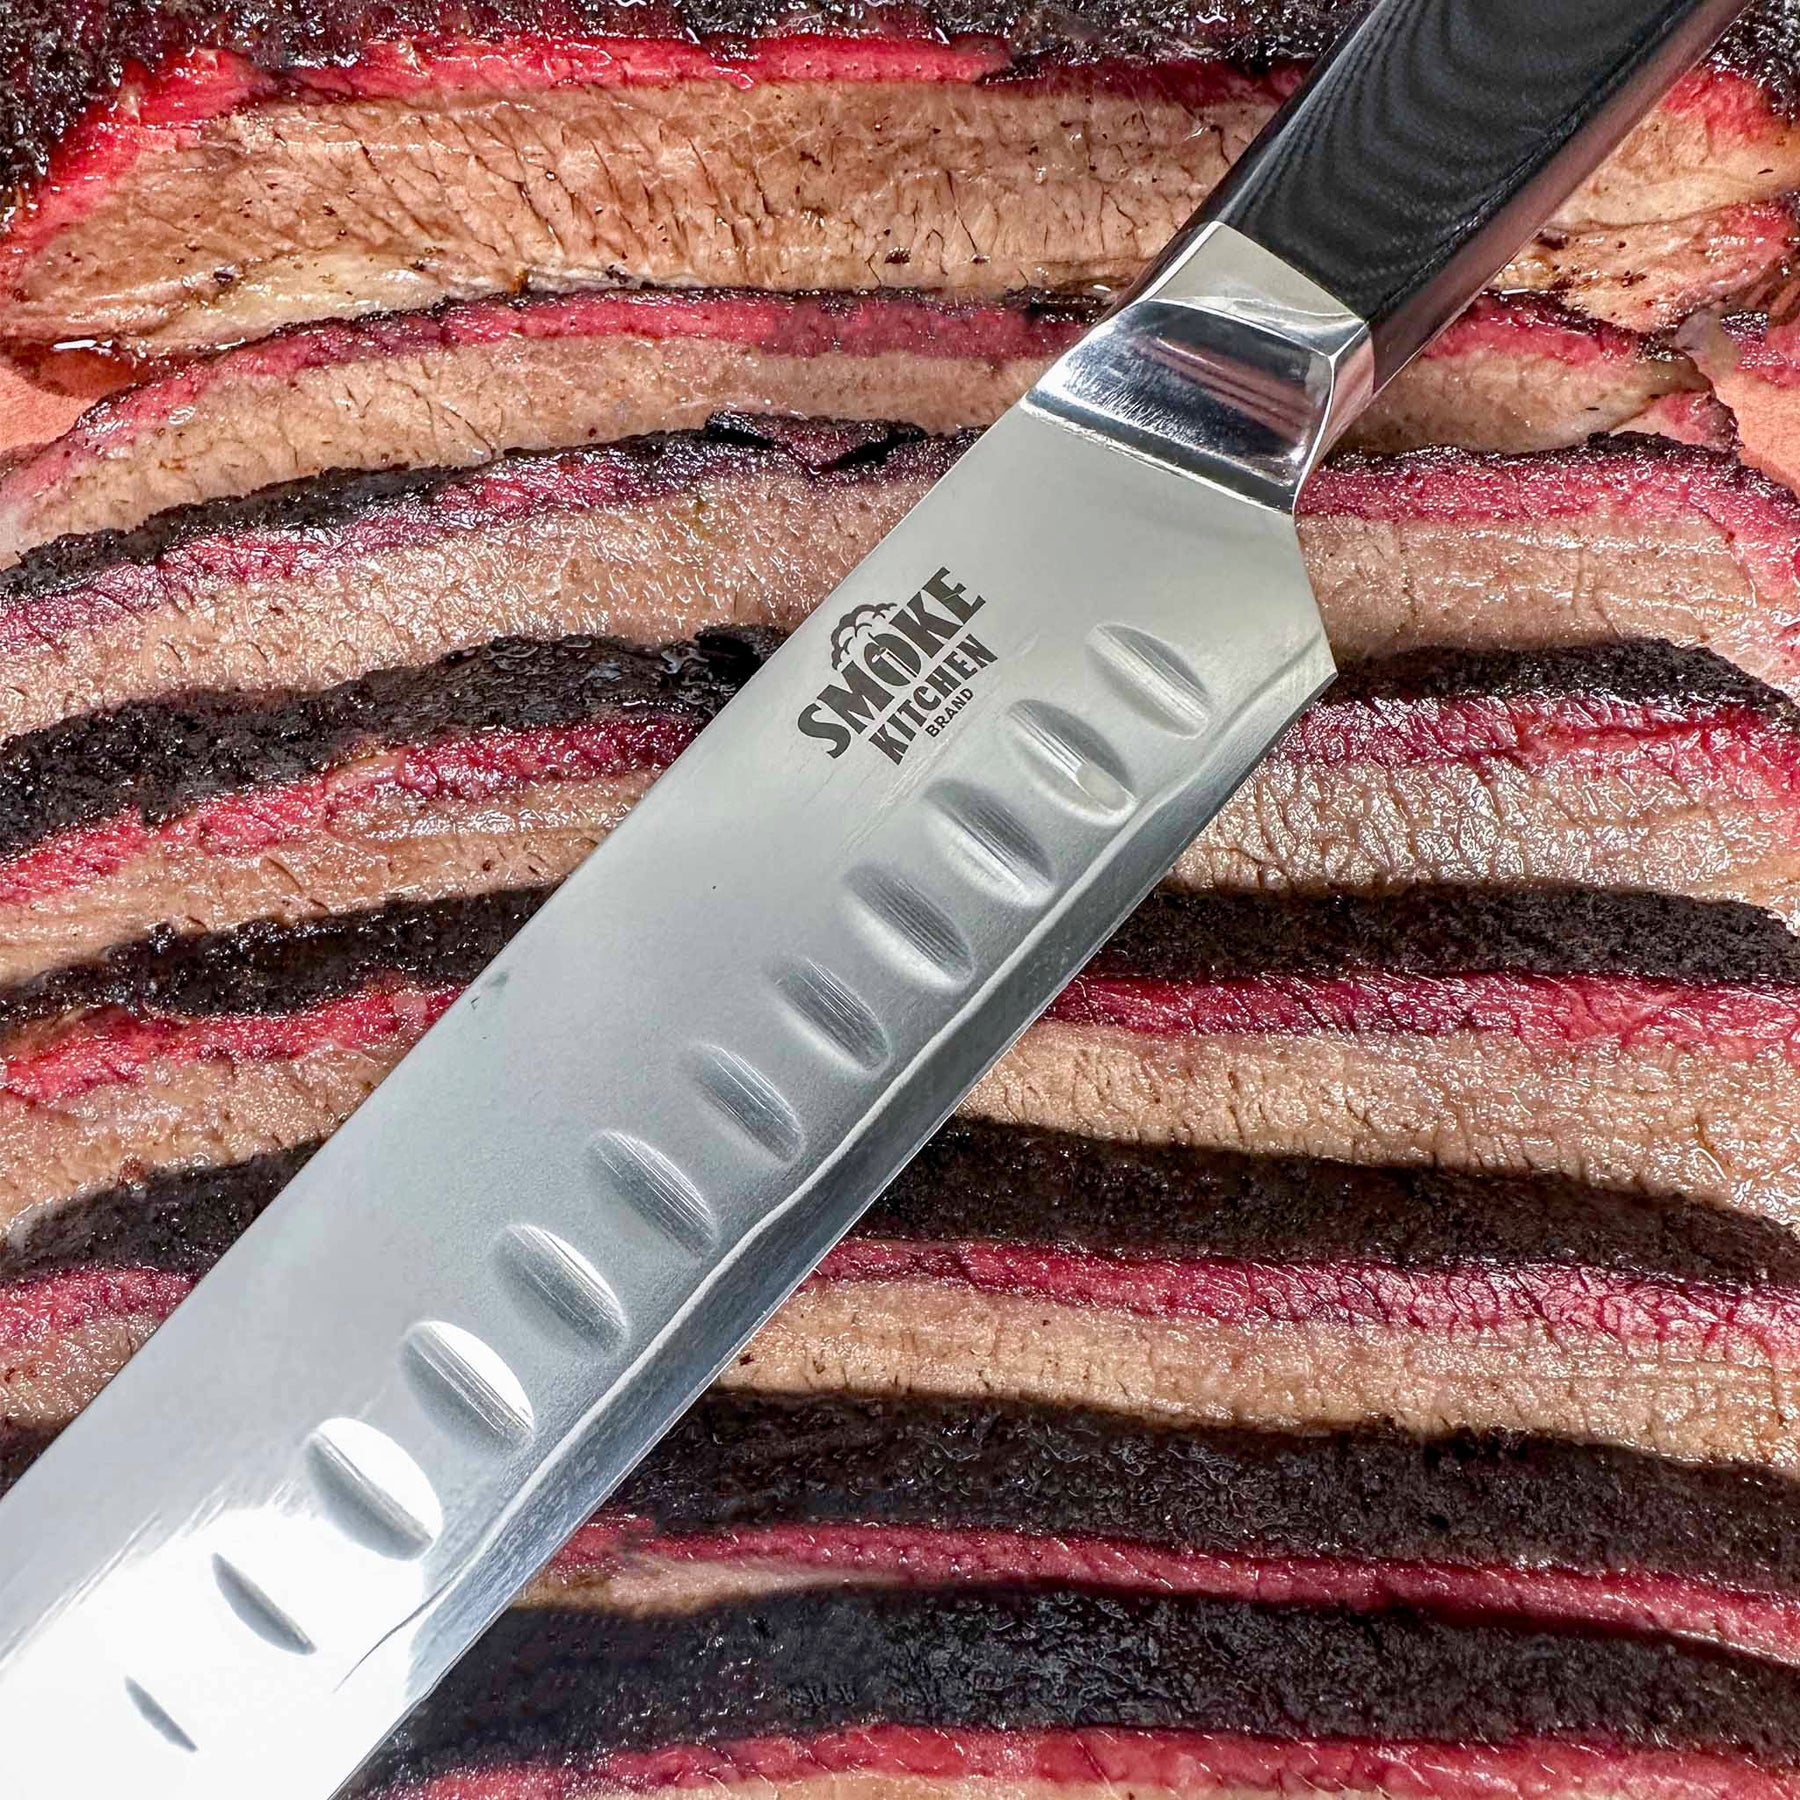 Bright Hobby SliceX Classic Brisket Slicing Knife - Razor Sharp 12 Carving Knife for Meat - Premium German Steel Meat Carving Knife Full Tang 